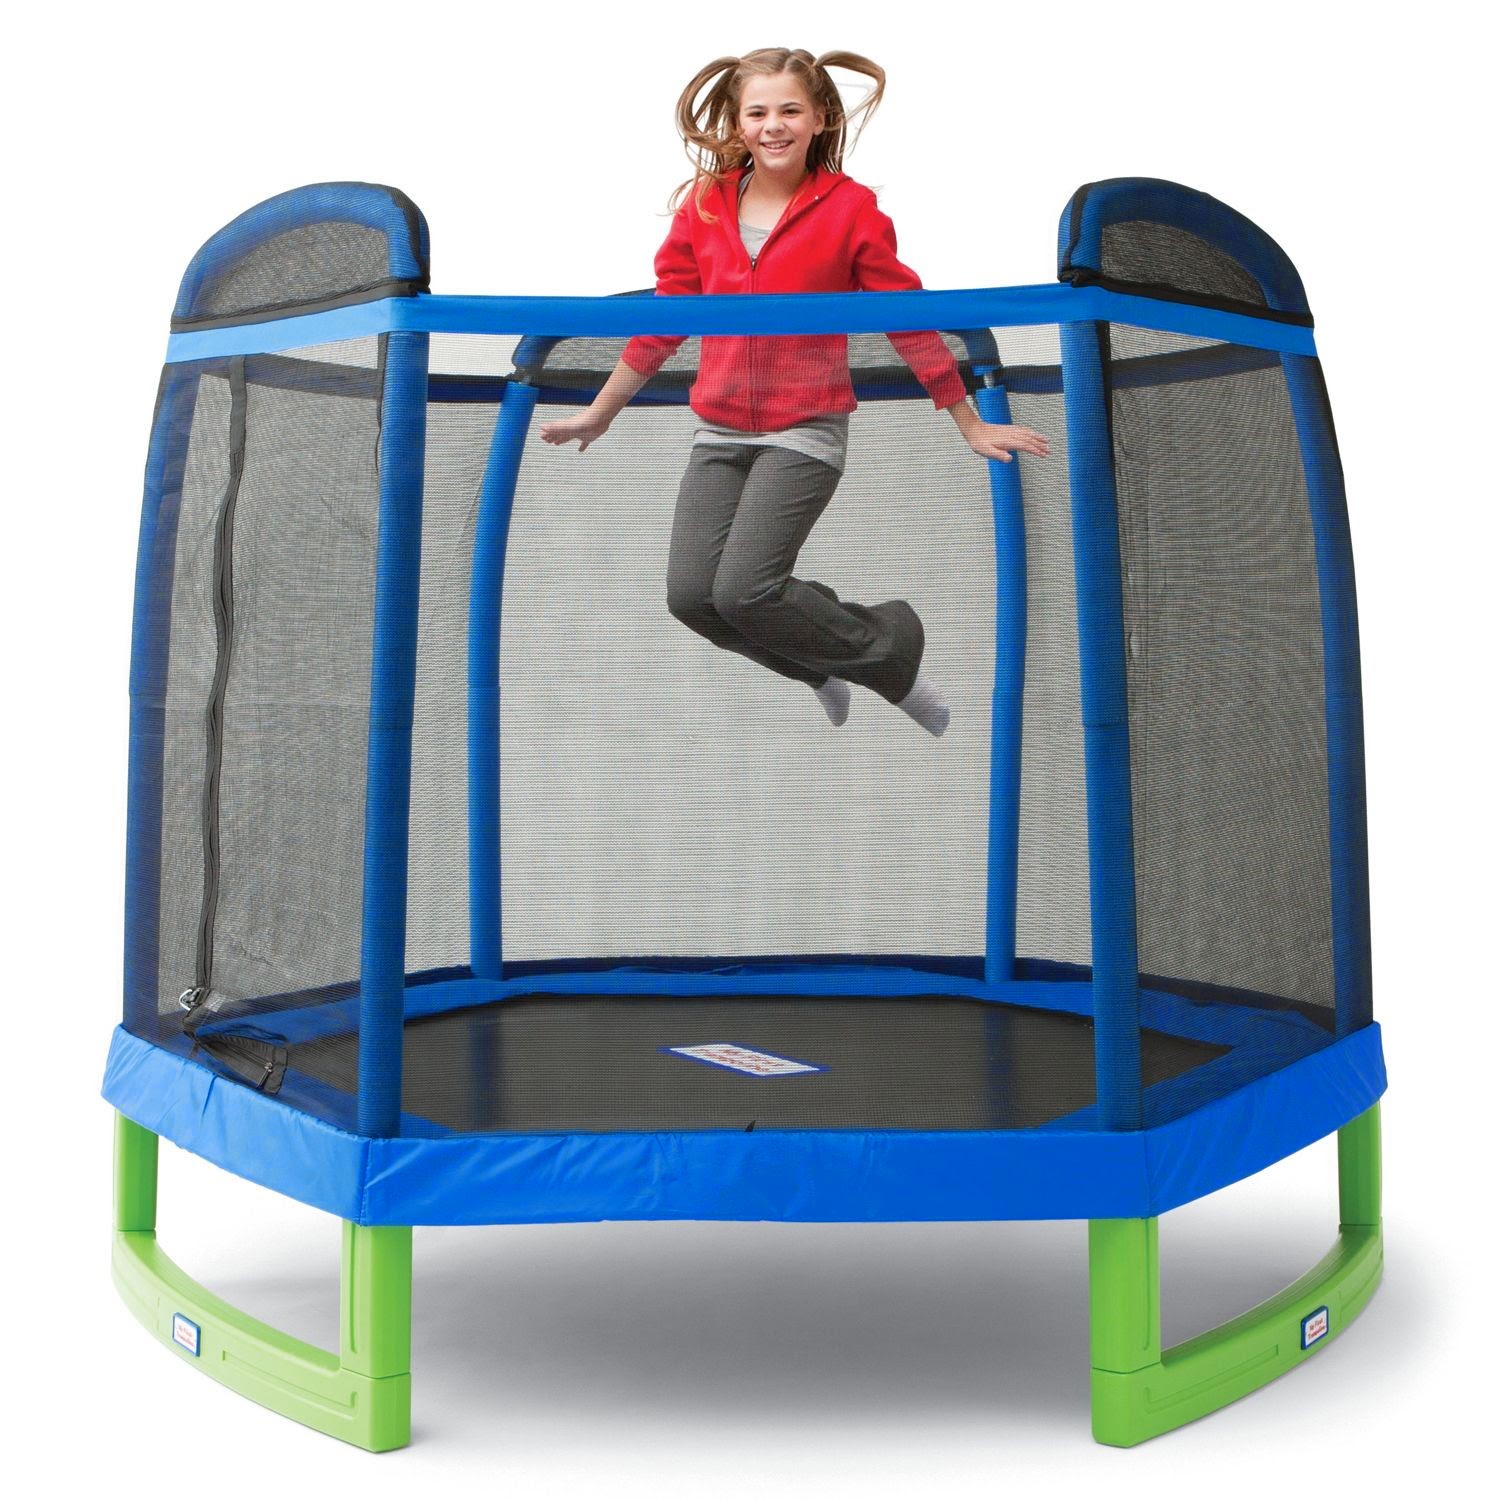 http://www.samsclub.com/sams/my-first-trampoline-with-enclosure-88/prod2100624.ip?navAction= 